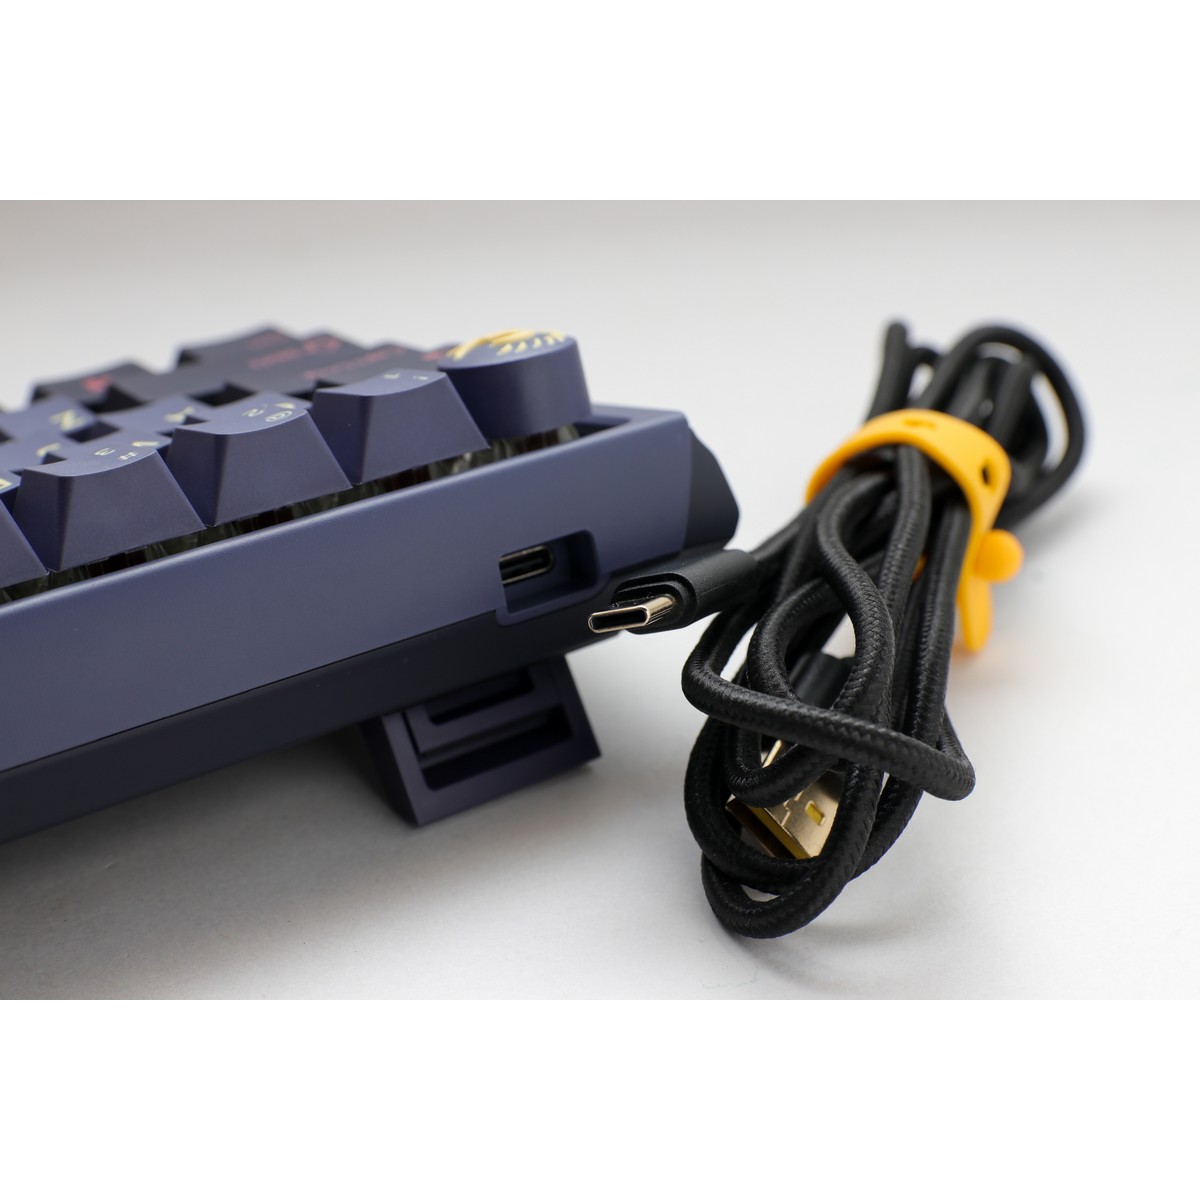 Ducky - Ducky One 3 Cosmic SF 65% USB RGB Mechanical Gaming Keyboard Cherry MX Blue Switch - UK Layout